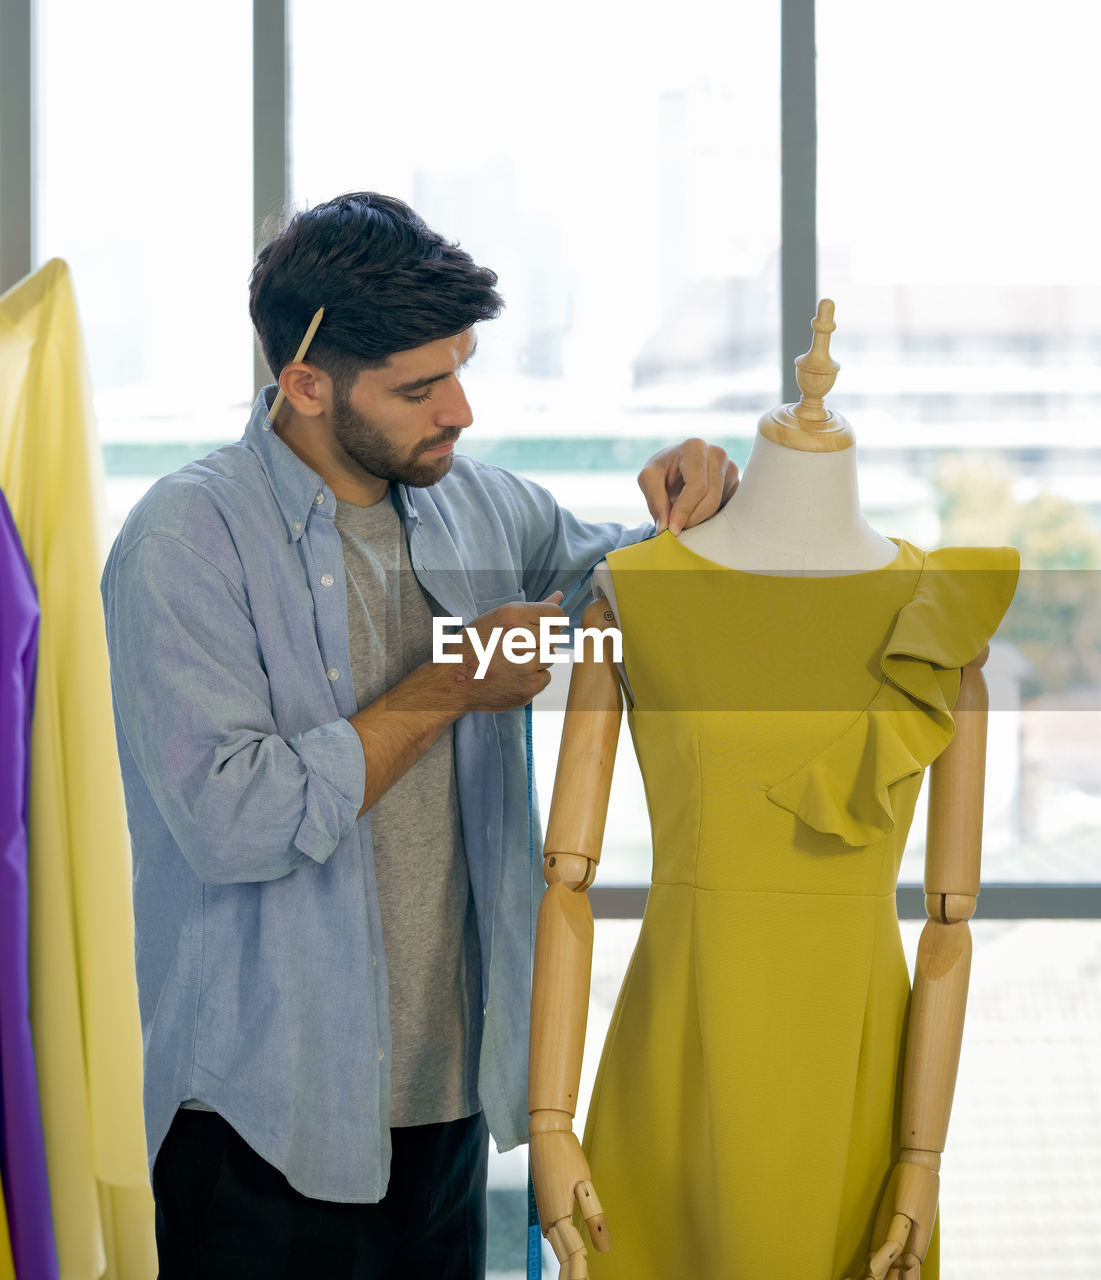 Male fashion designer taking measurements at boutique